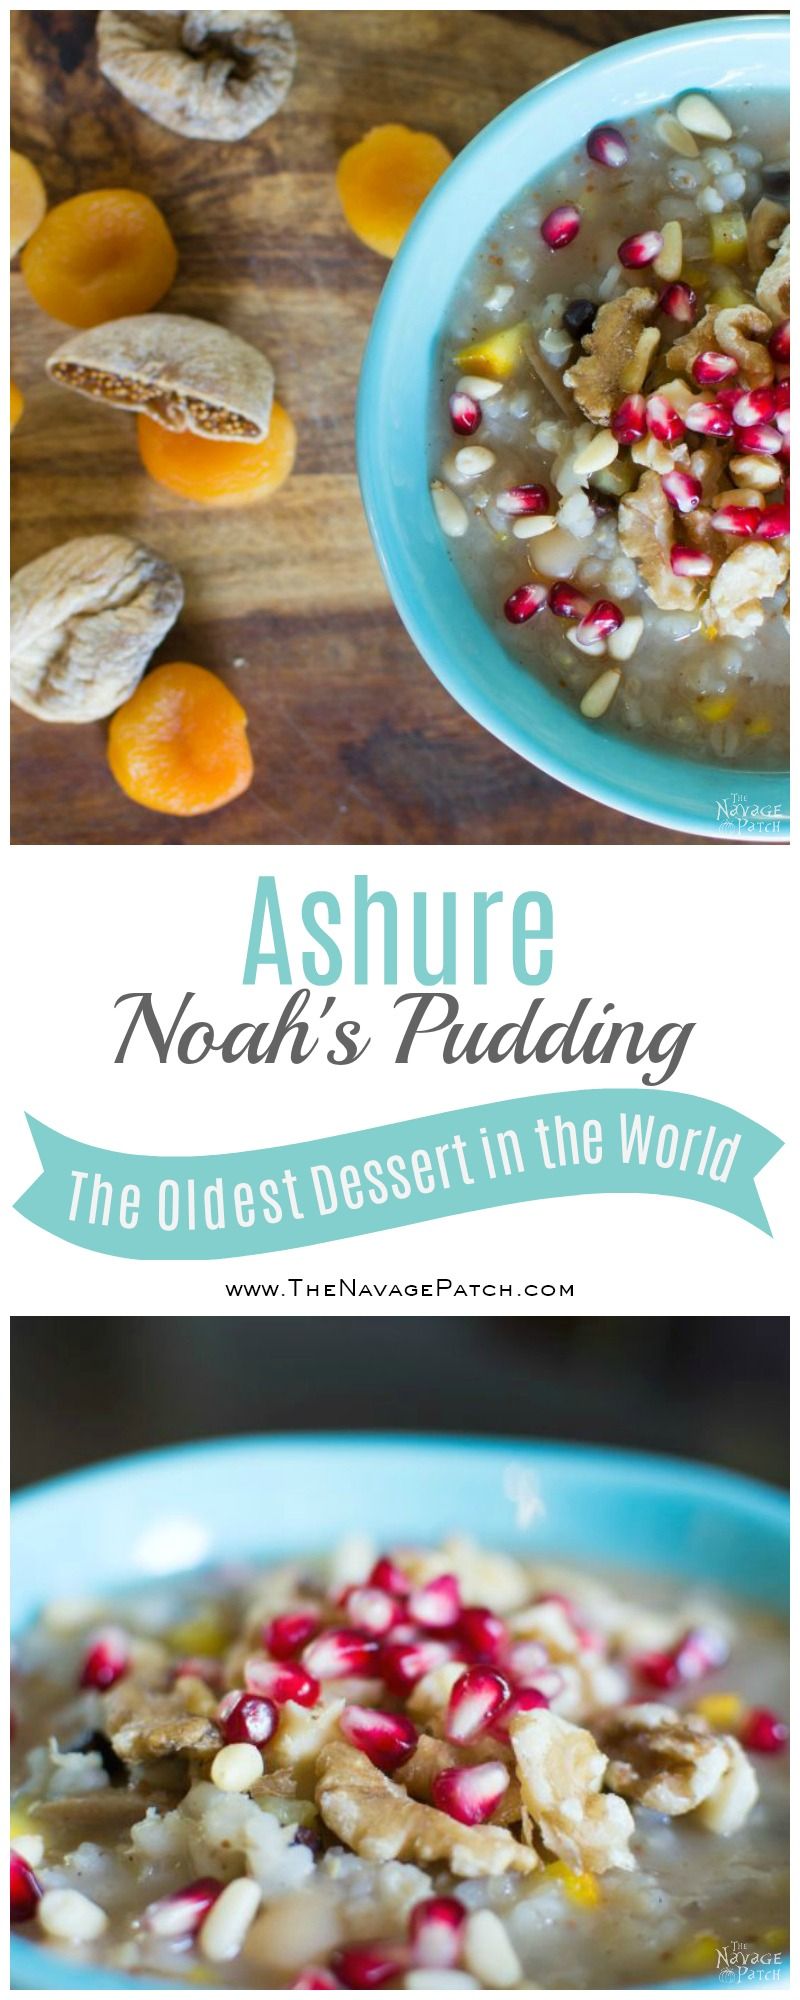 Ashure Noah's Pudding | Aşure | The Oldest Dessert in the World | Turkish Dessert | Porridge | Congee | Vegan Dessert | Grains | Dried Fruit | Nuts | Dessert Recipe | Sweet | TheNavagePatch.com